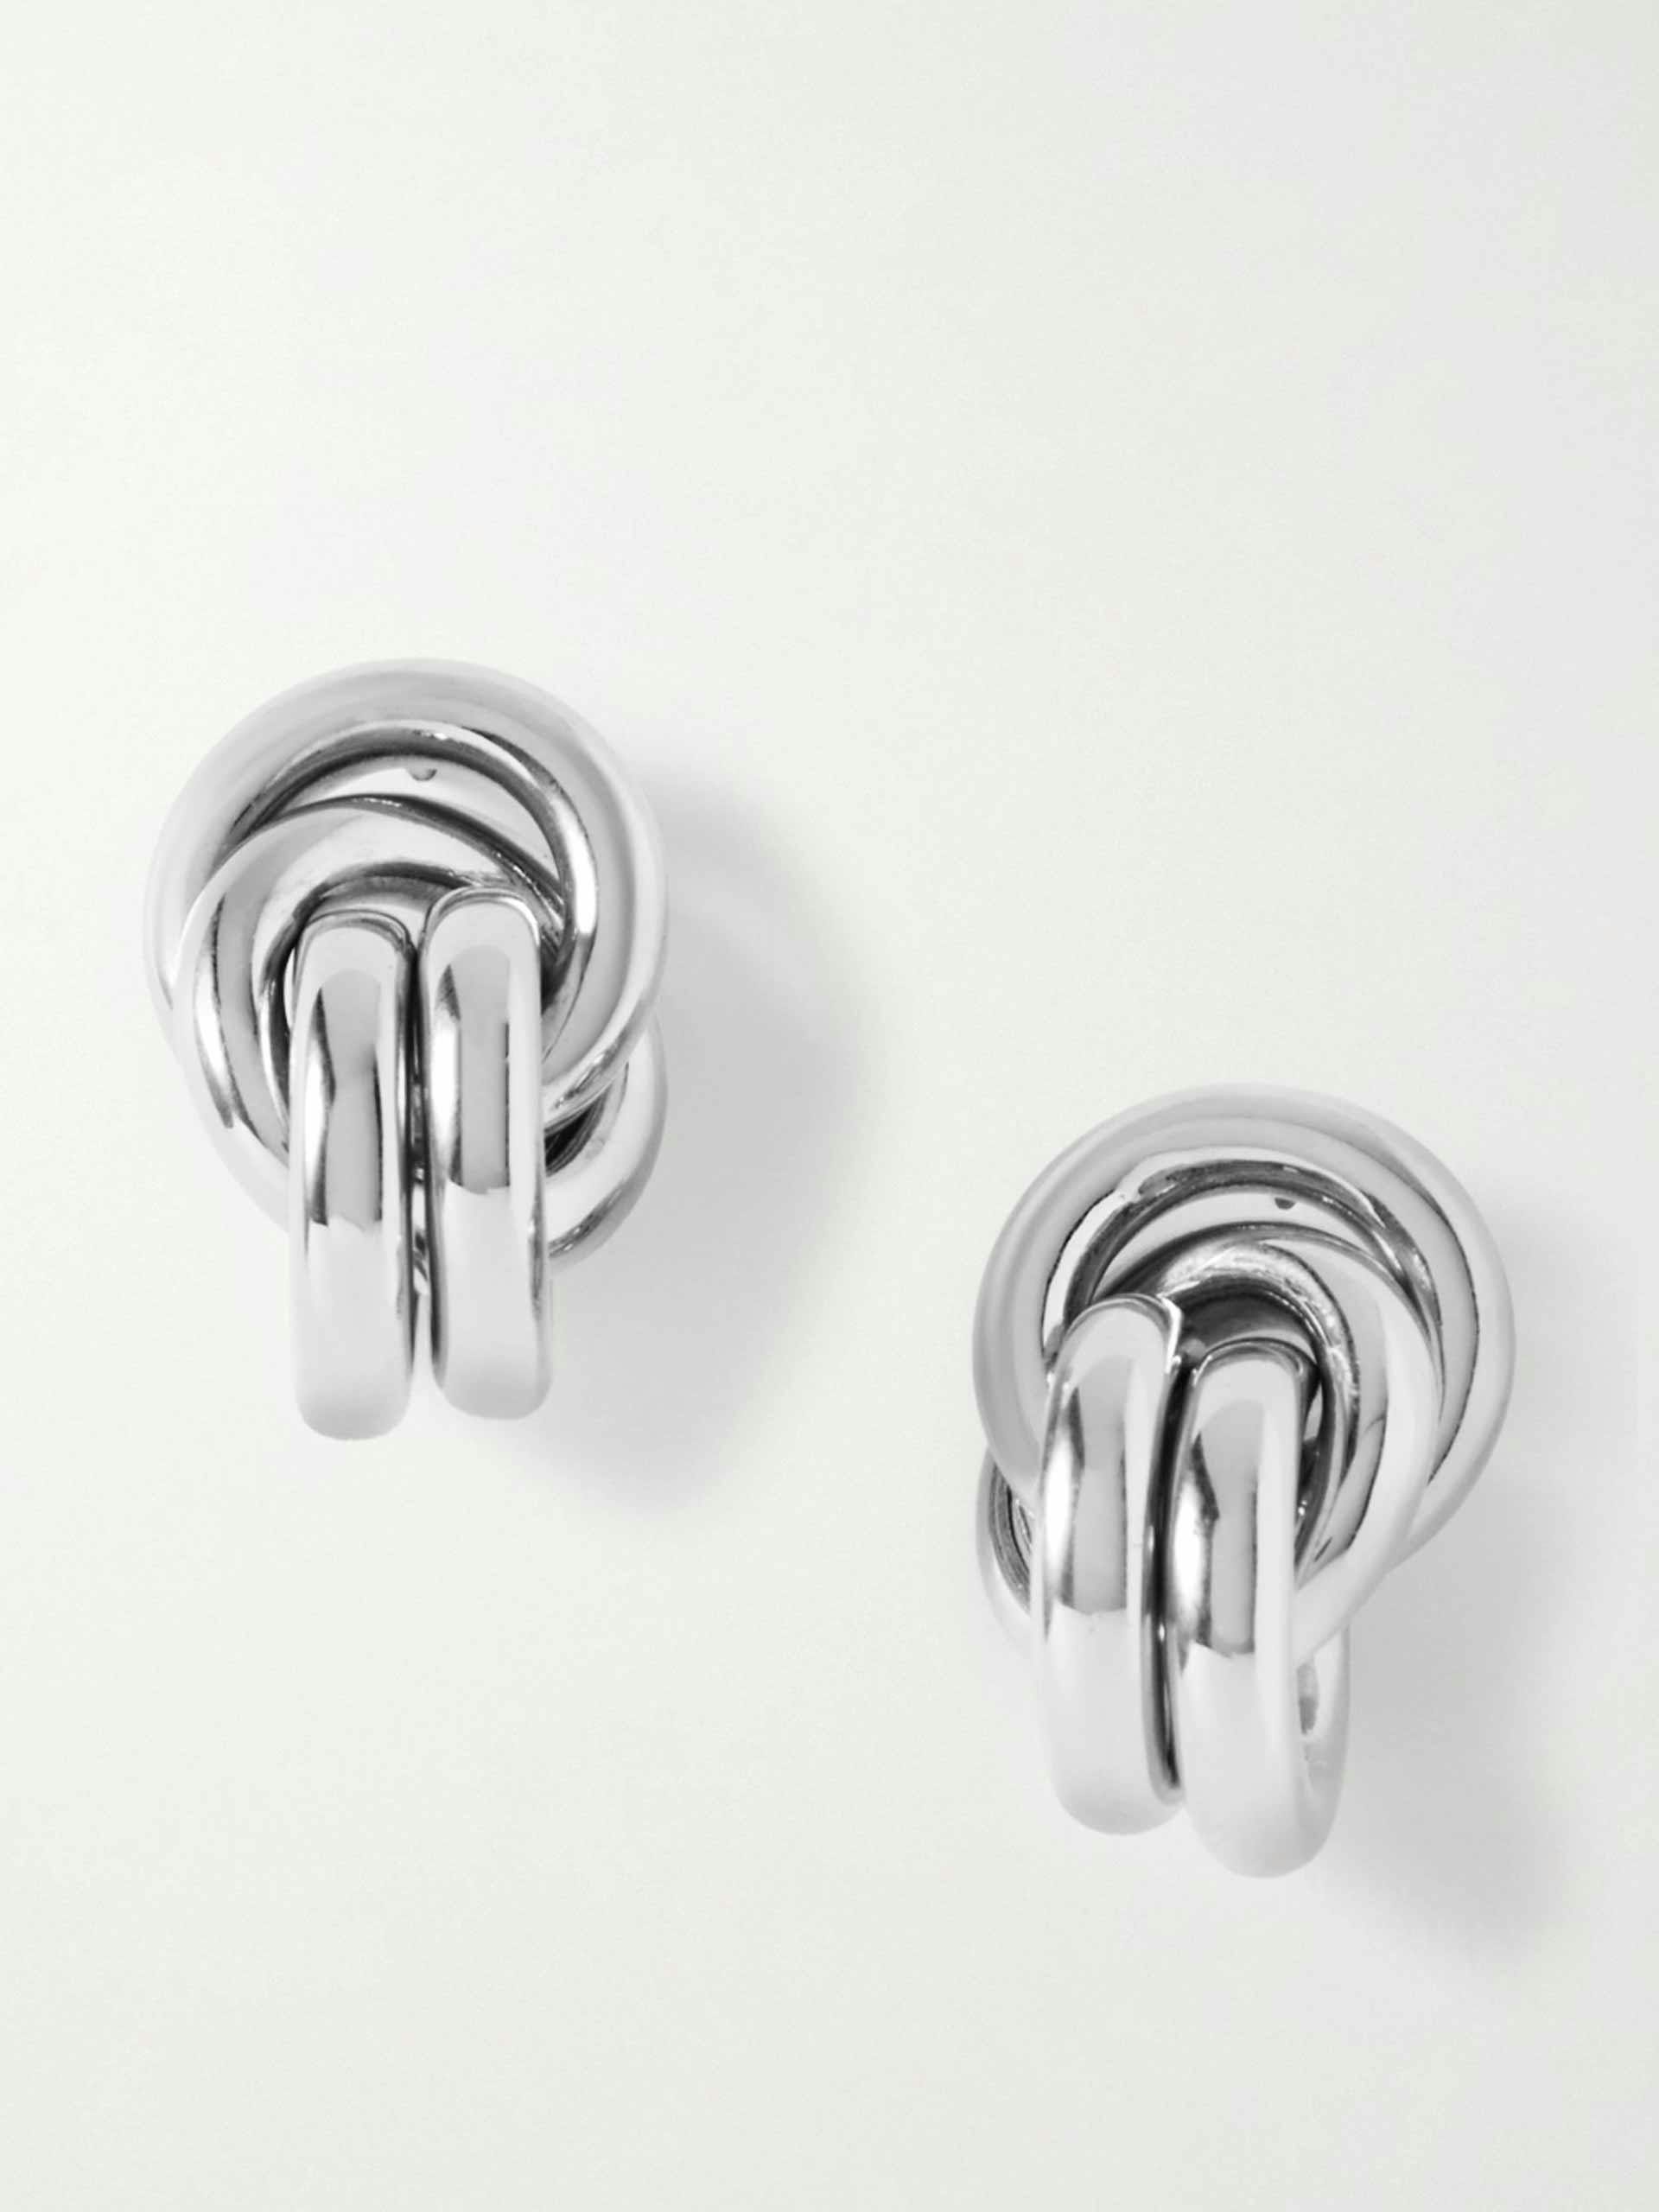 The Vera silver earrings